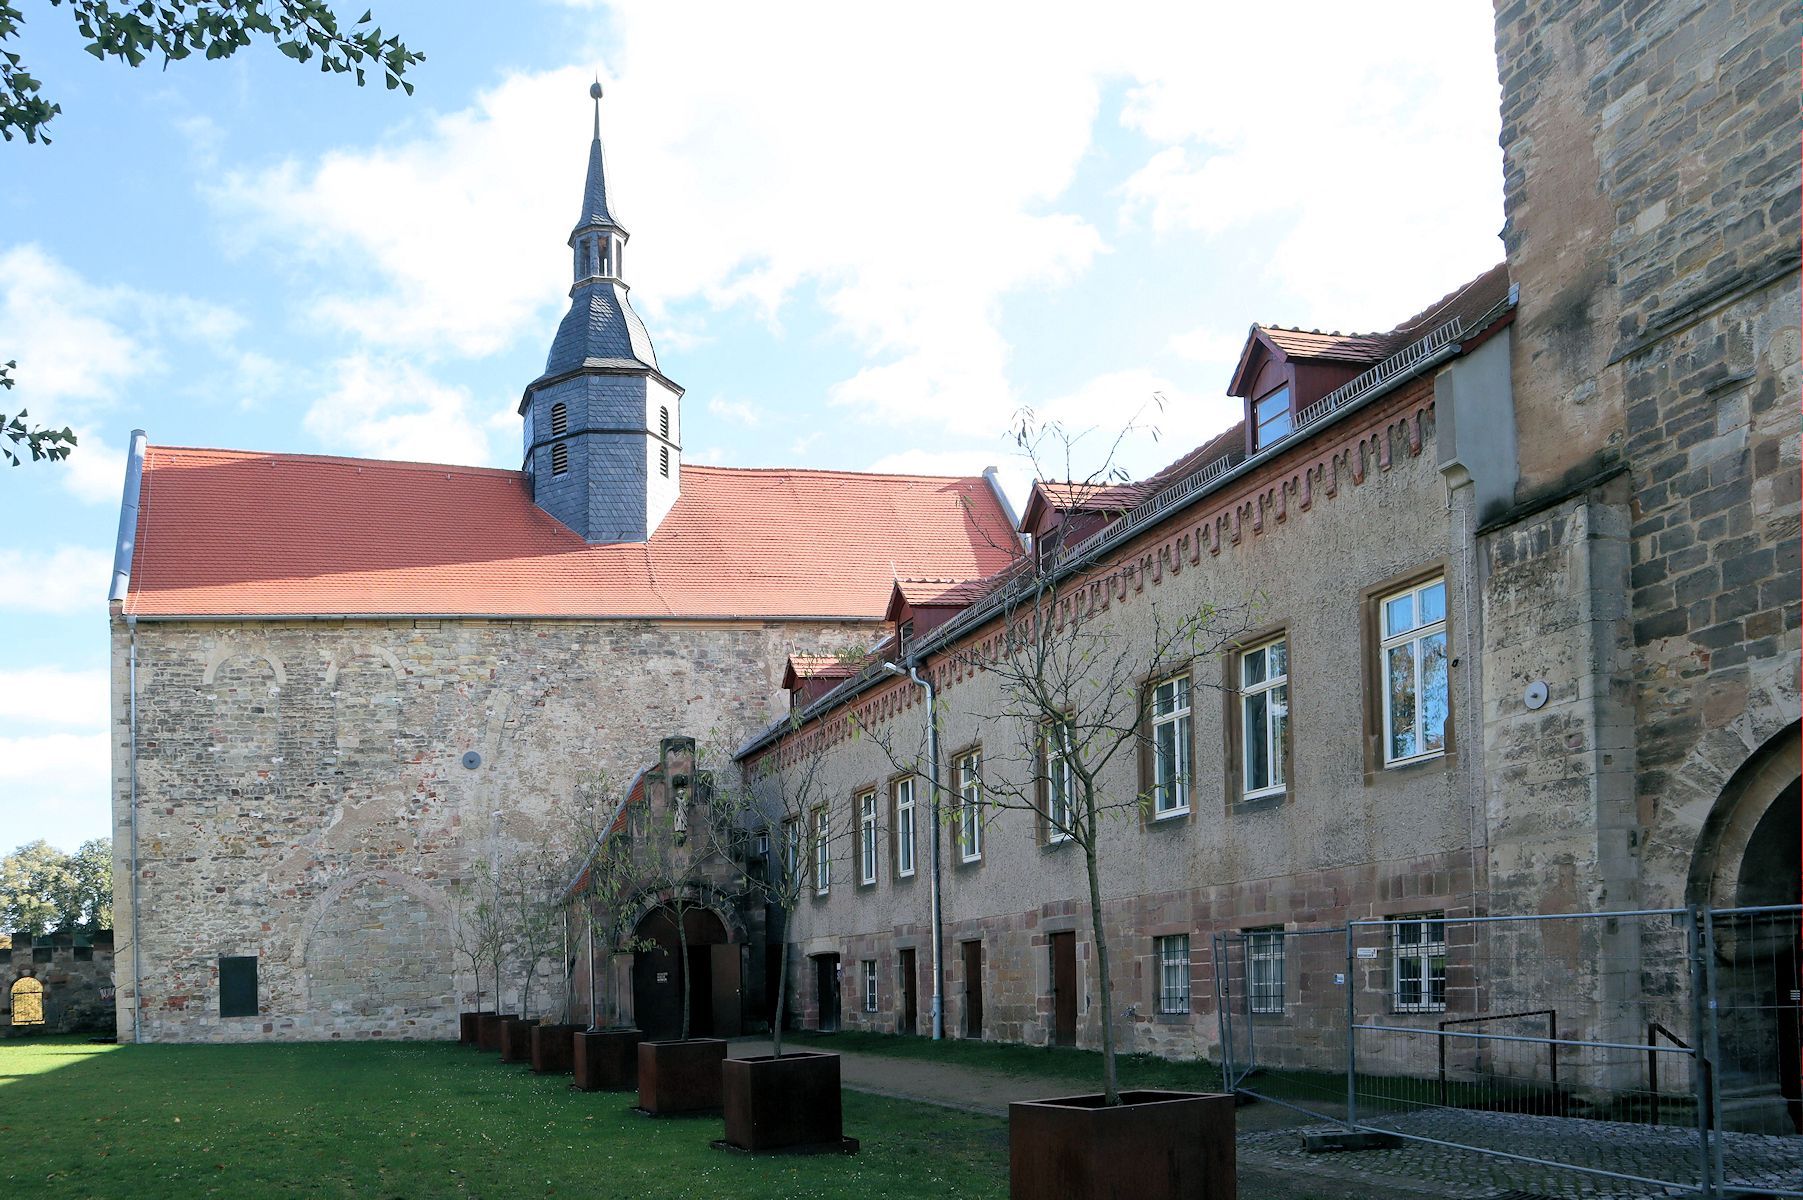 Kirche und ehemaliges Schloss Goseck